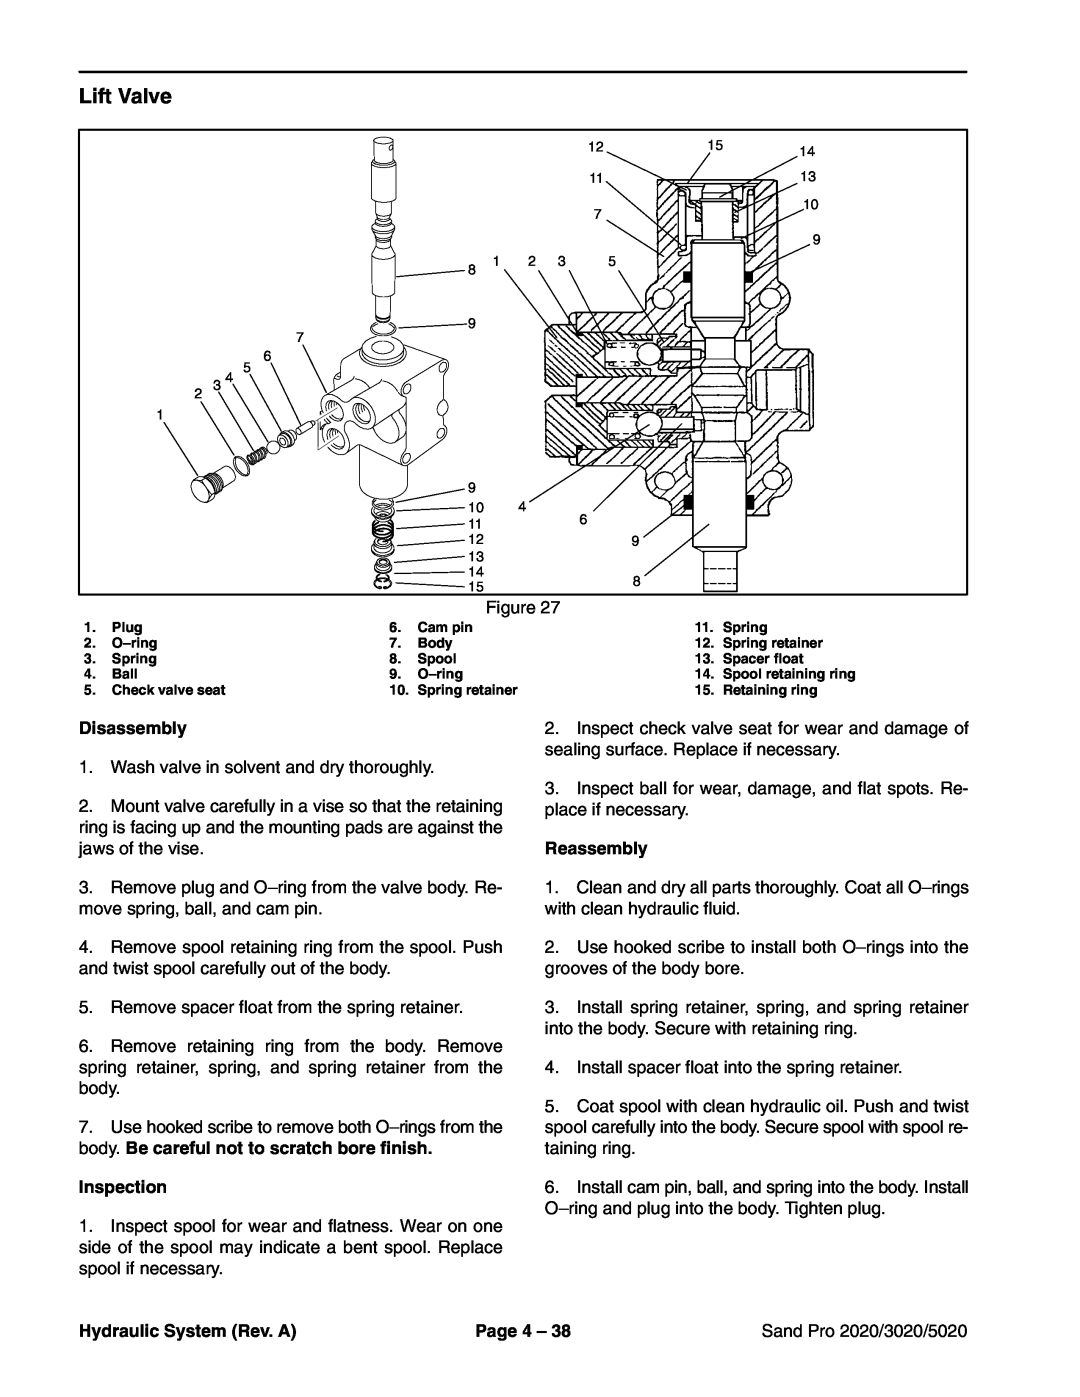 Toro Lift Valve, Disassembly, Inspection, Reassembly, Hydraulic System Rev. A, Page 4, Sand Pro 2020/3020/5020 